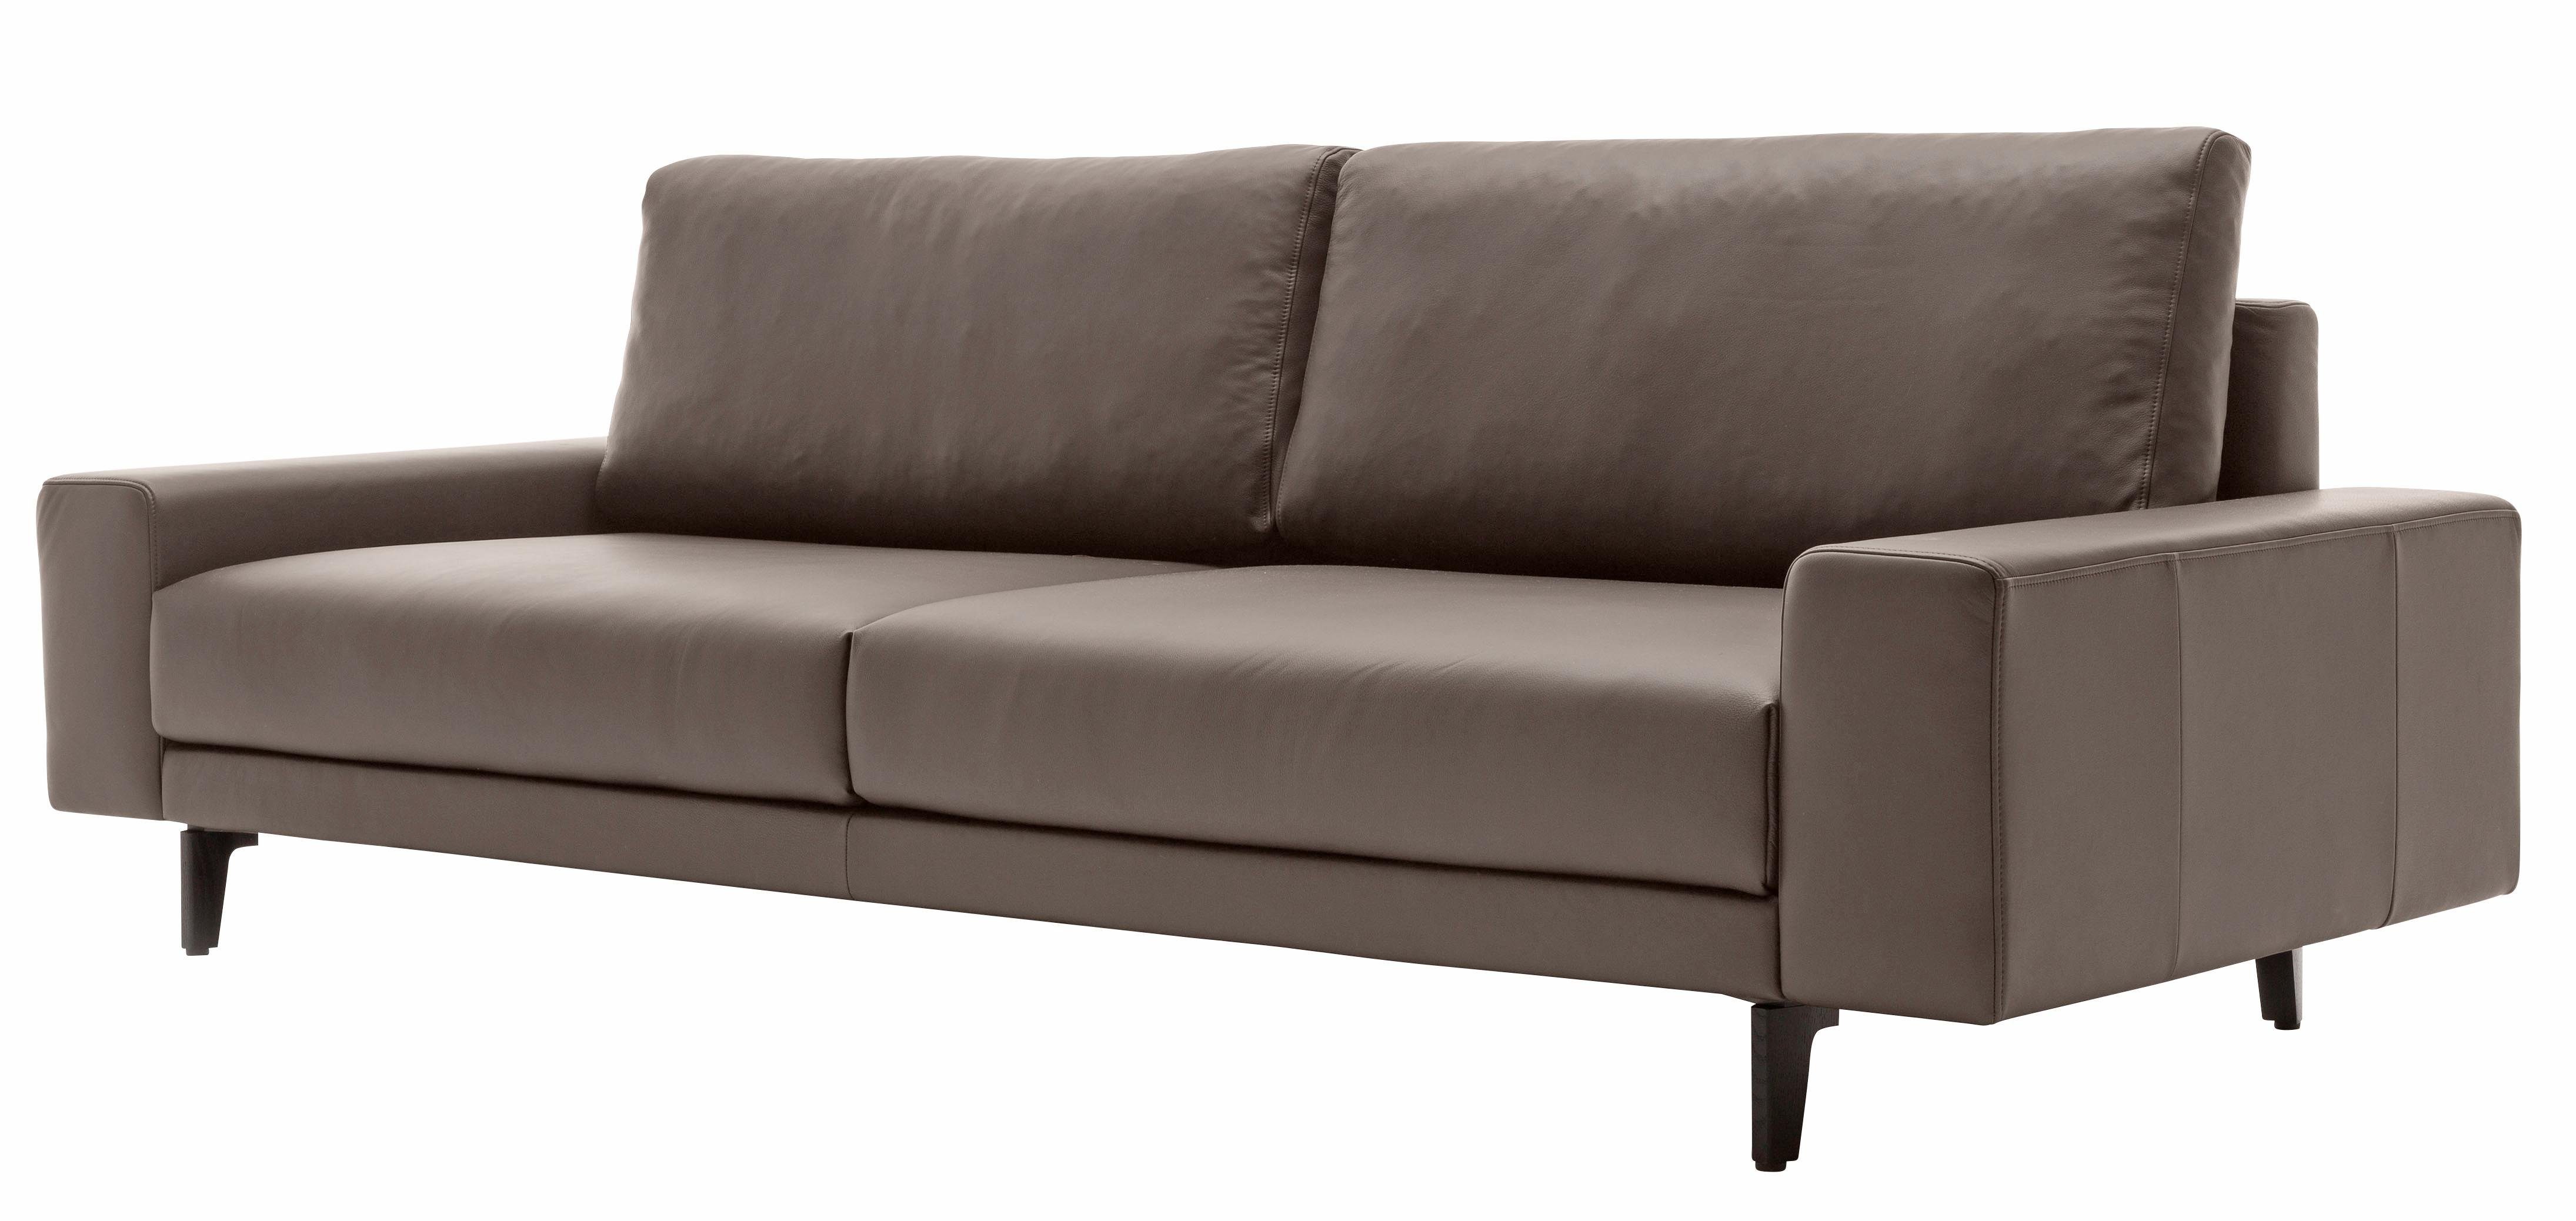 hülsta sofa 3-Sitzer 220 breit niedrig, cm hs.450, in Breite umbragrau, Armlehne Alugussfüße